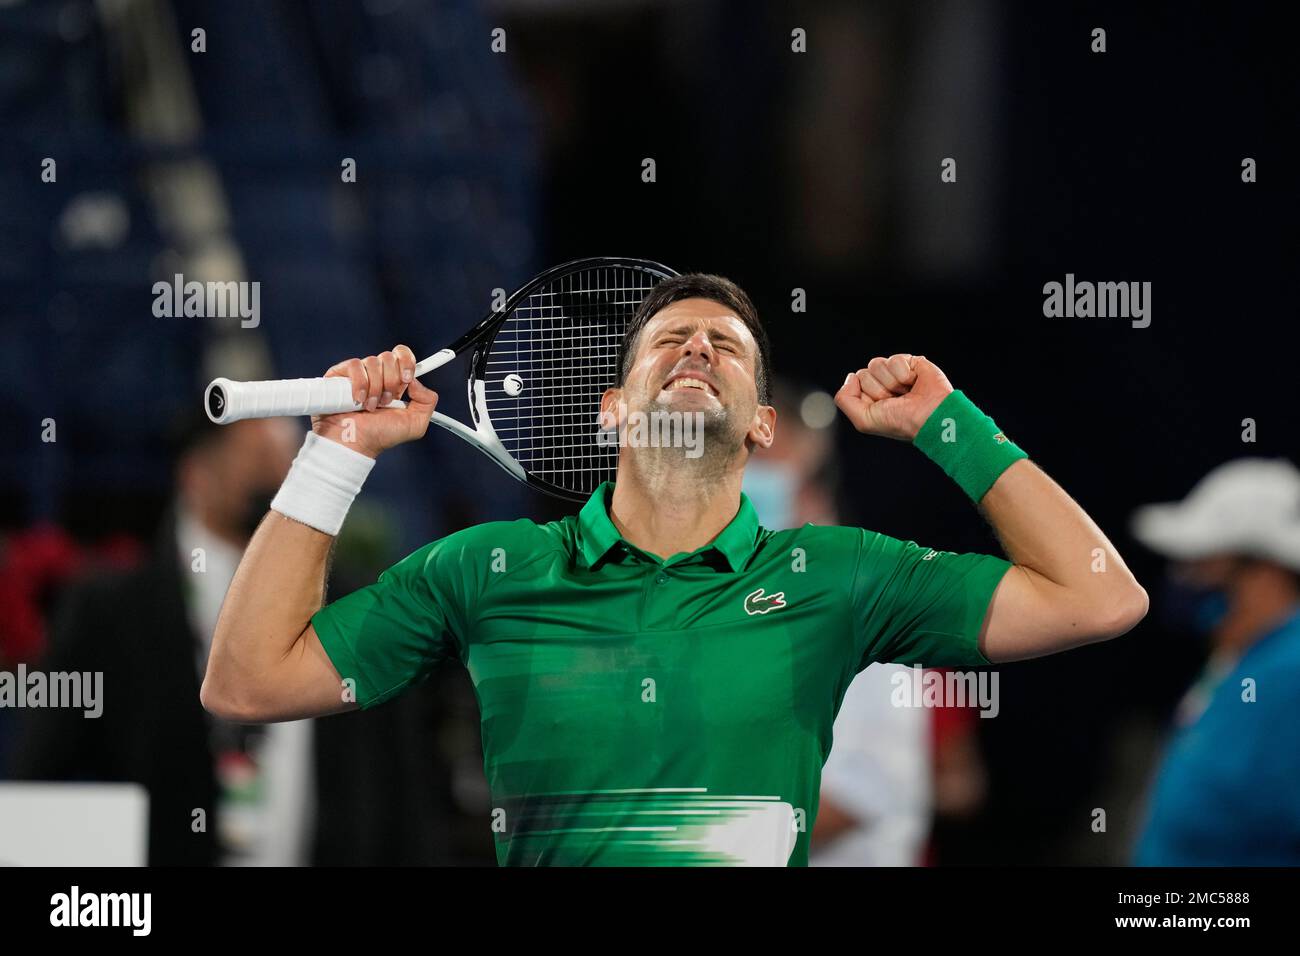 Djokovic wins his first match of 2022 in Dubai